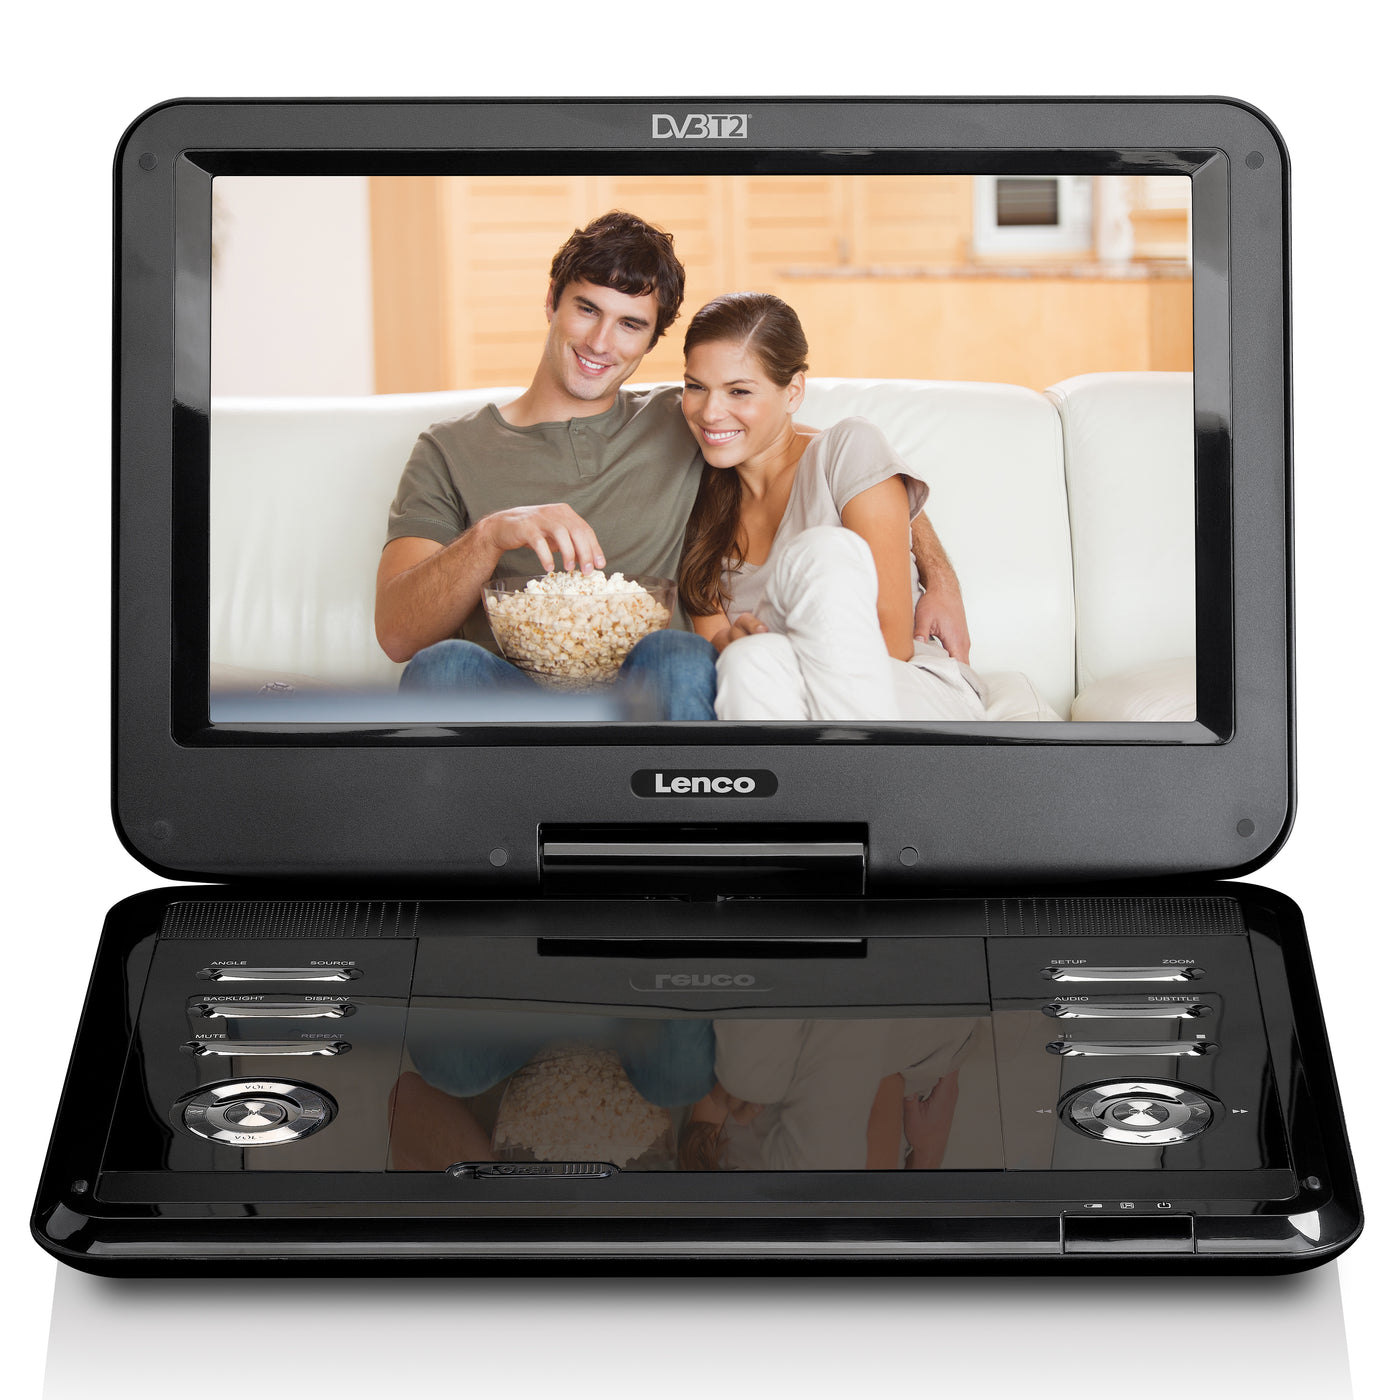 LENCO DVP-1273 - 12" portable DVD player with DVB-T2 receiver - Black